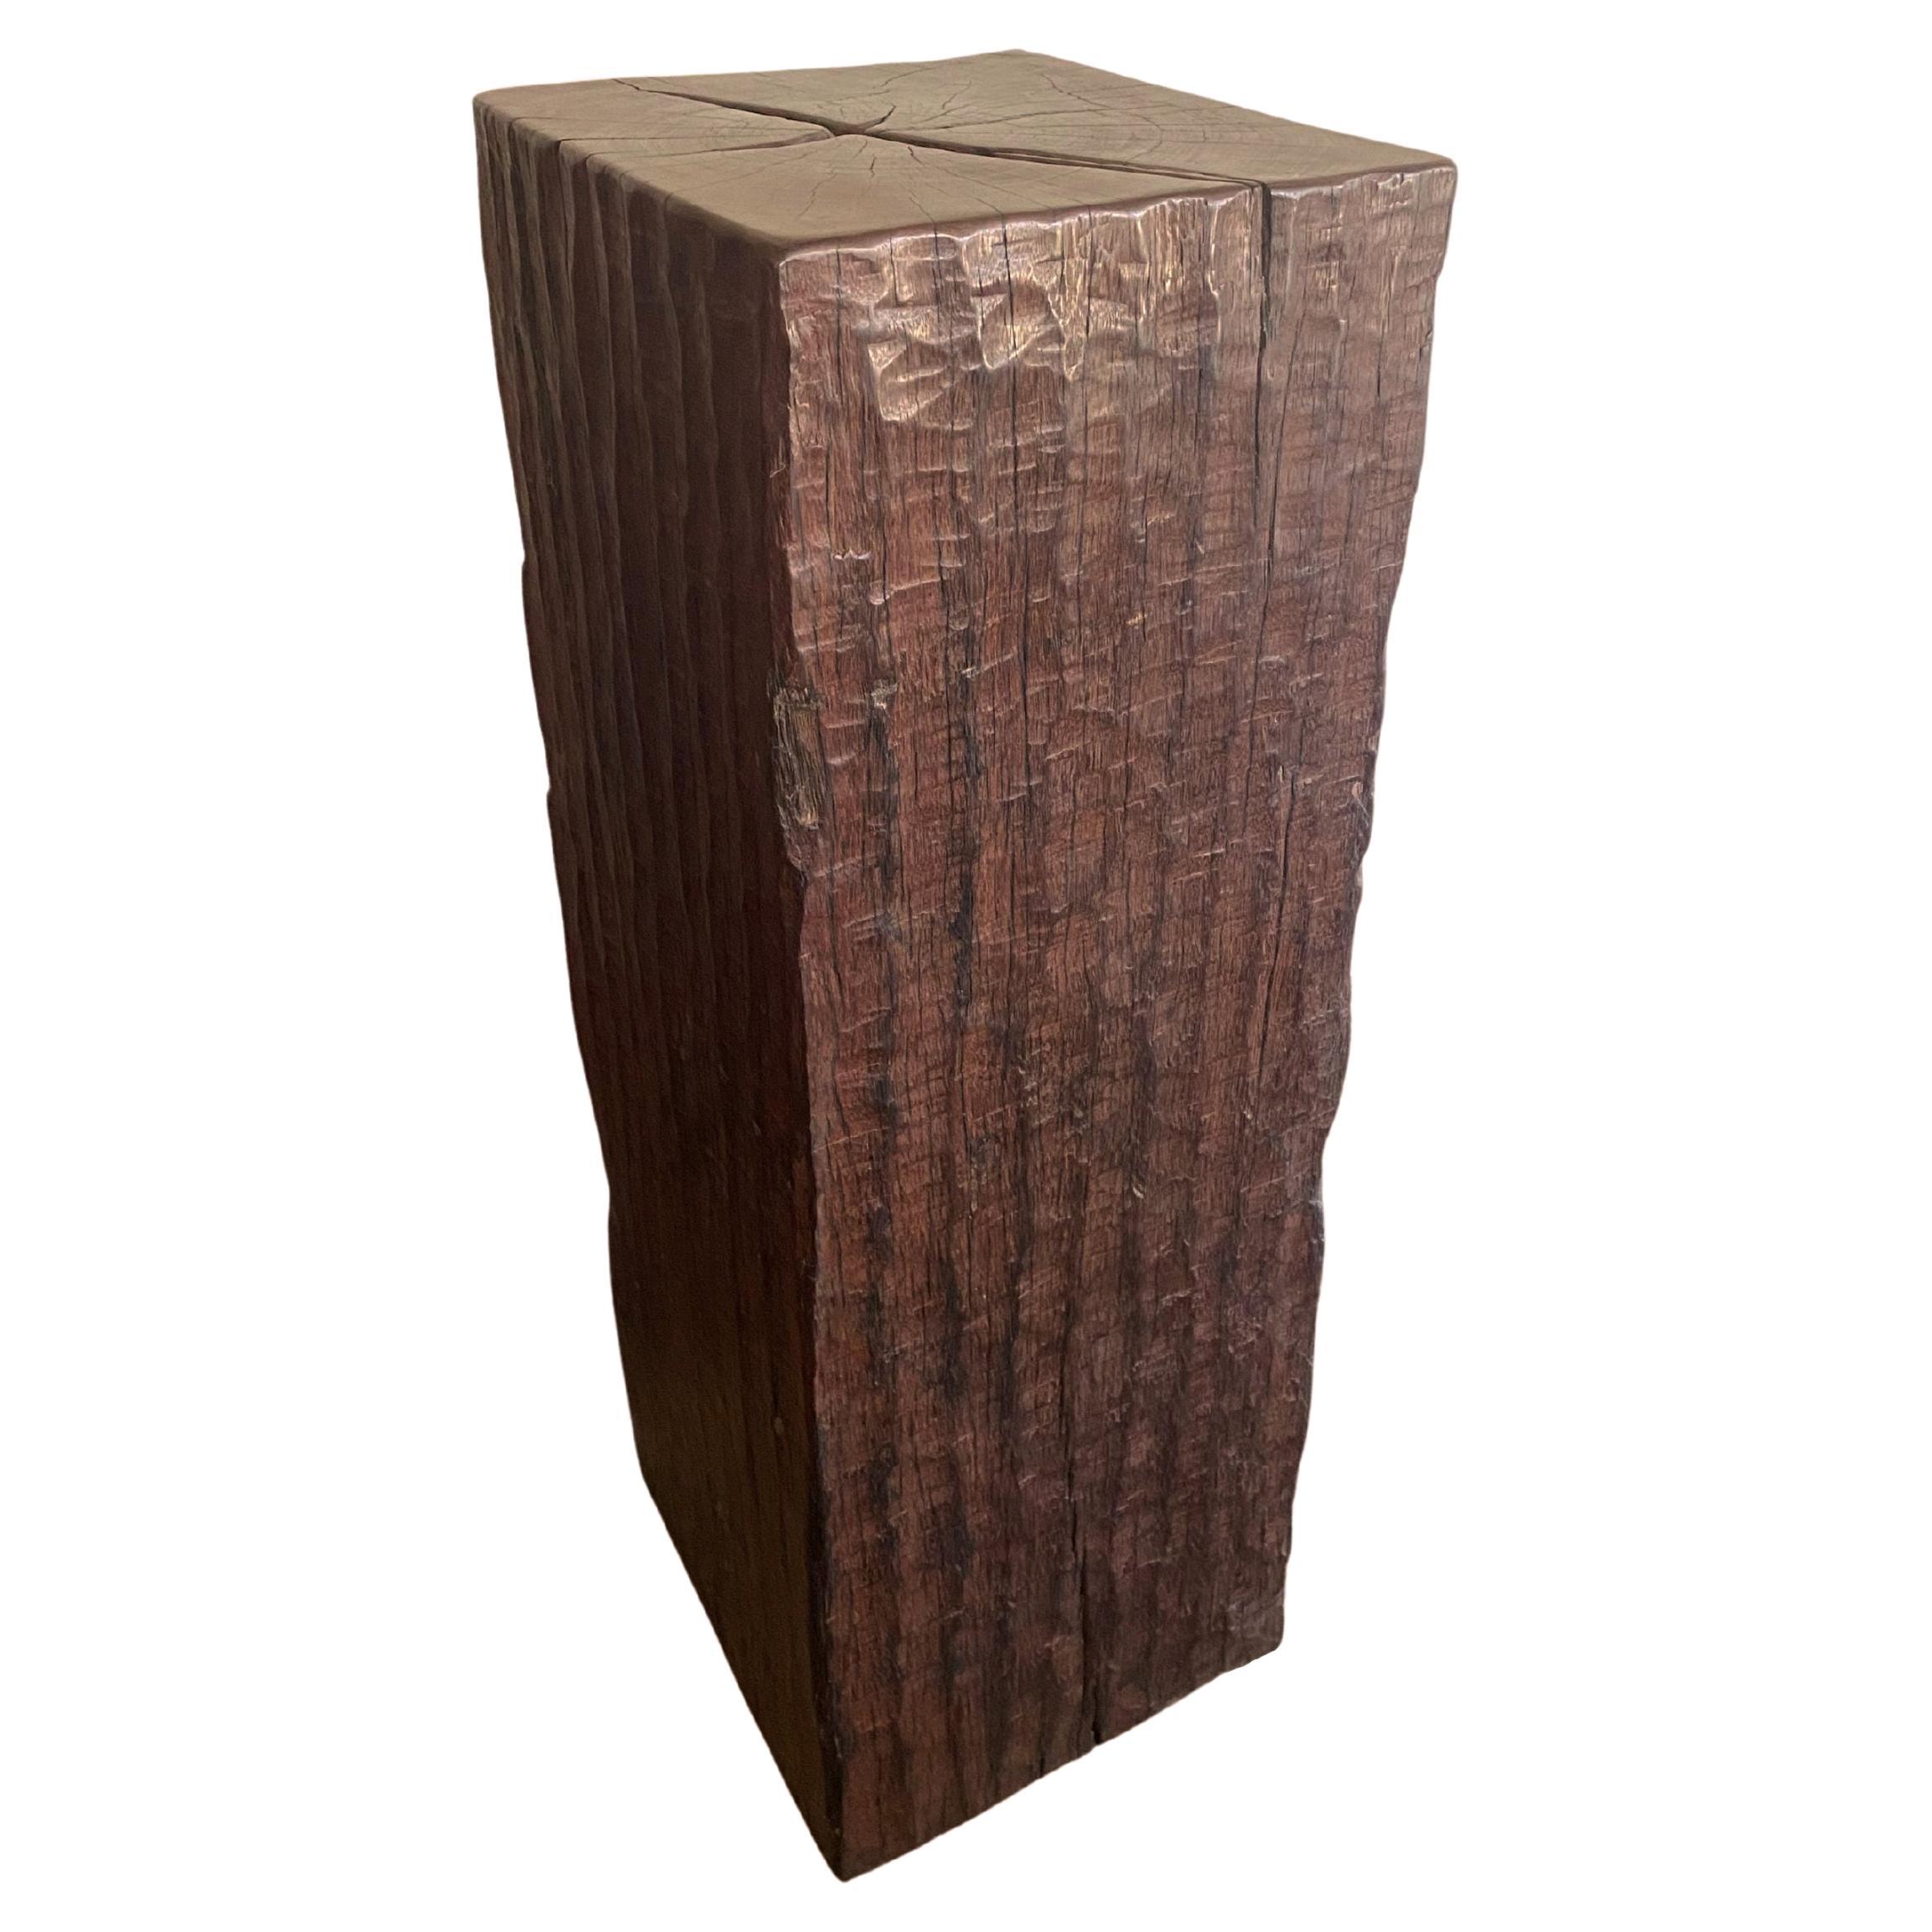 Sockel aus massivem Eisenholz mit atemberaubender Holzstruktur